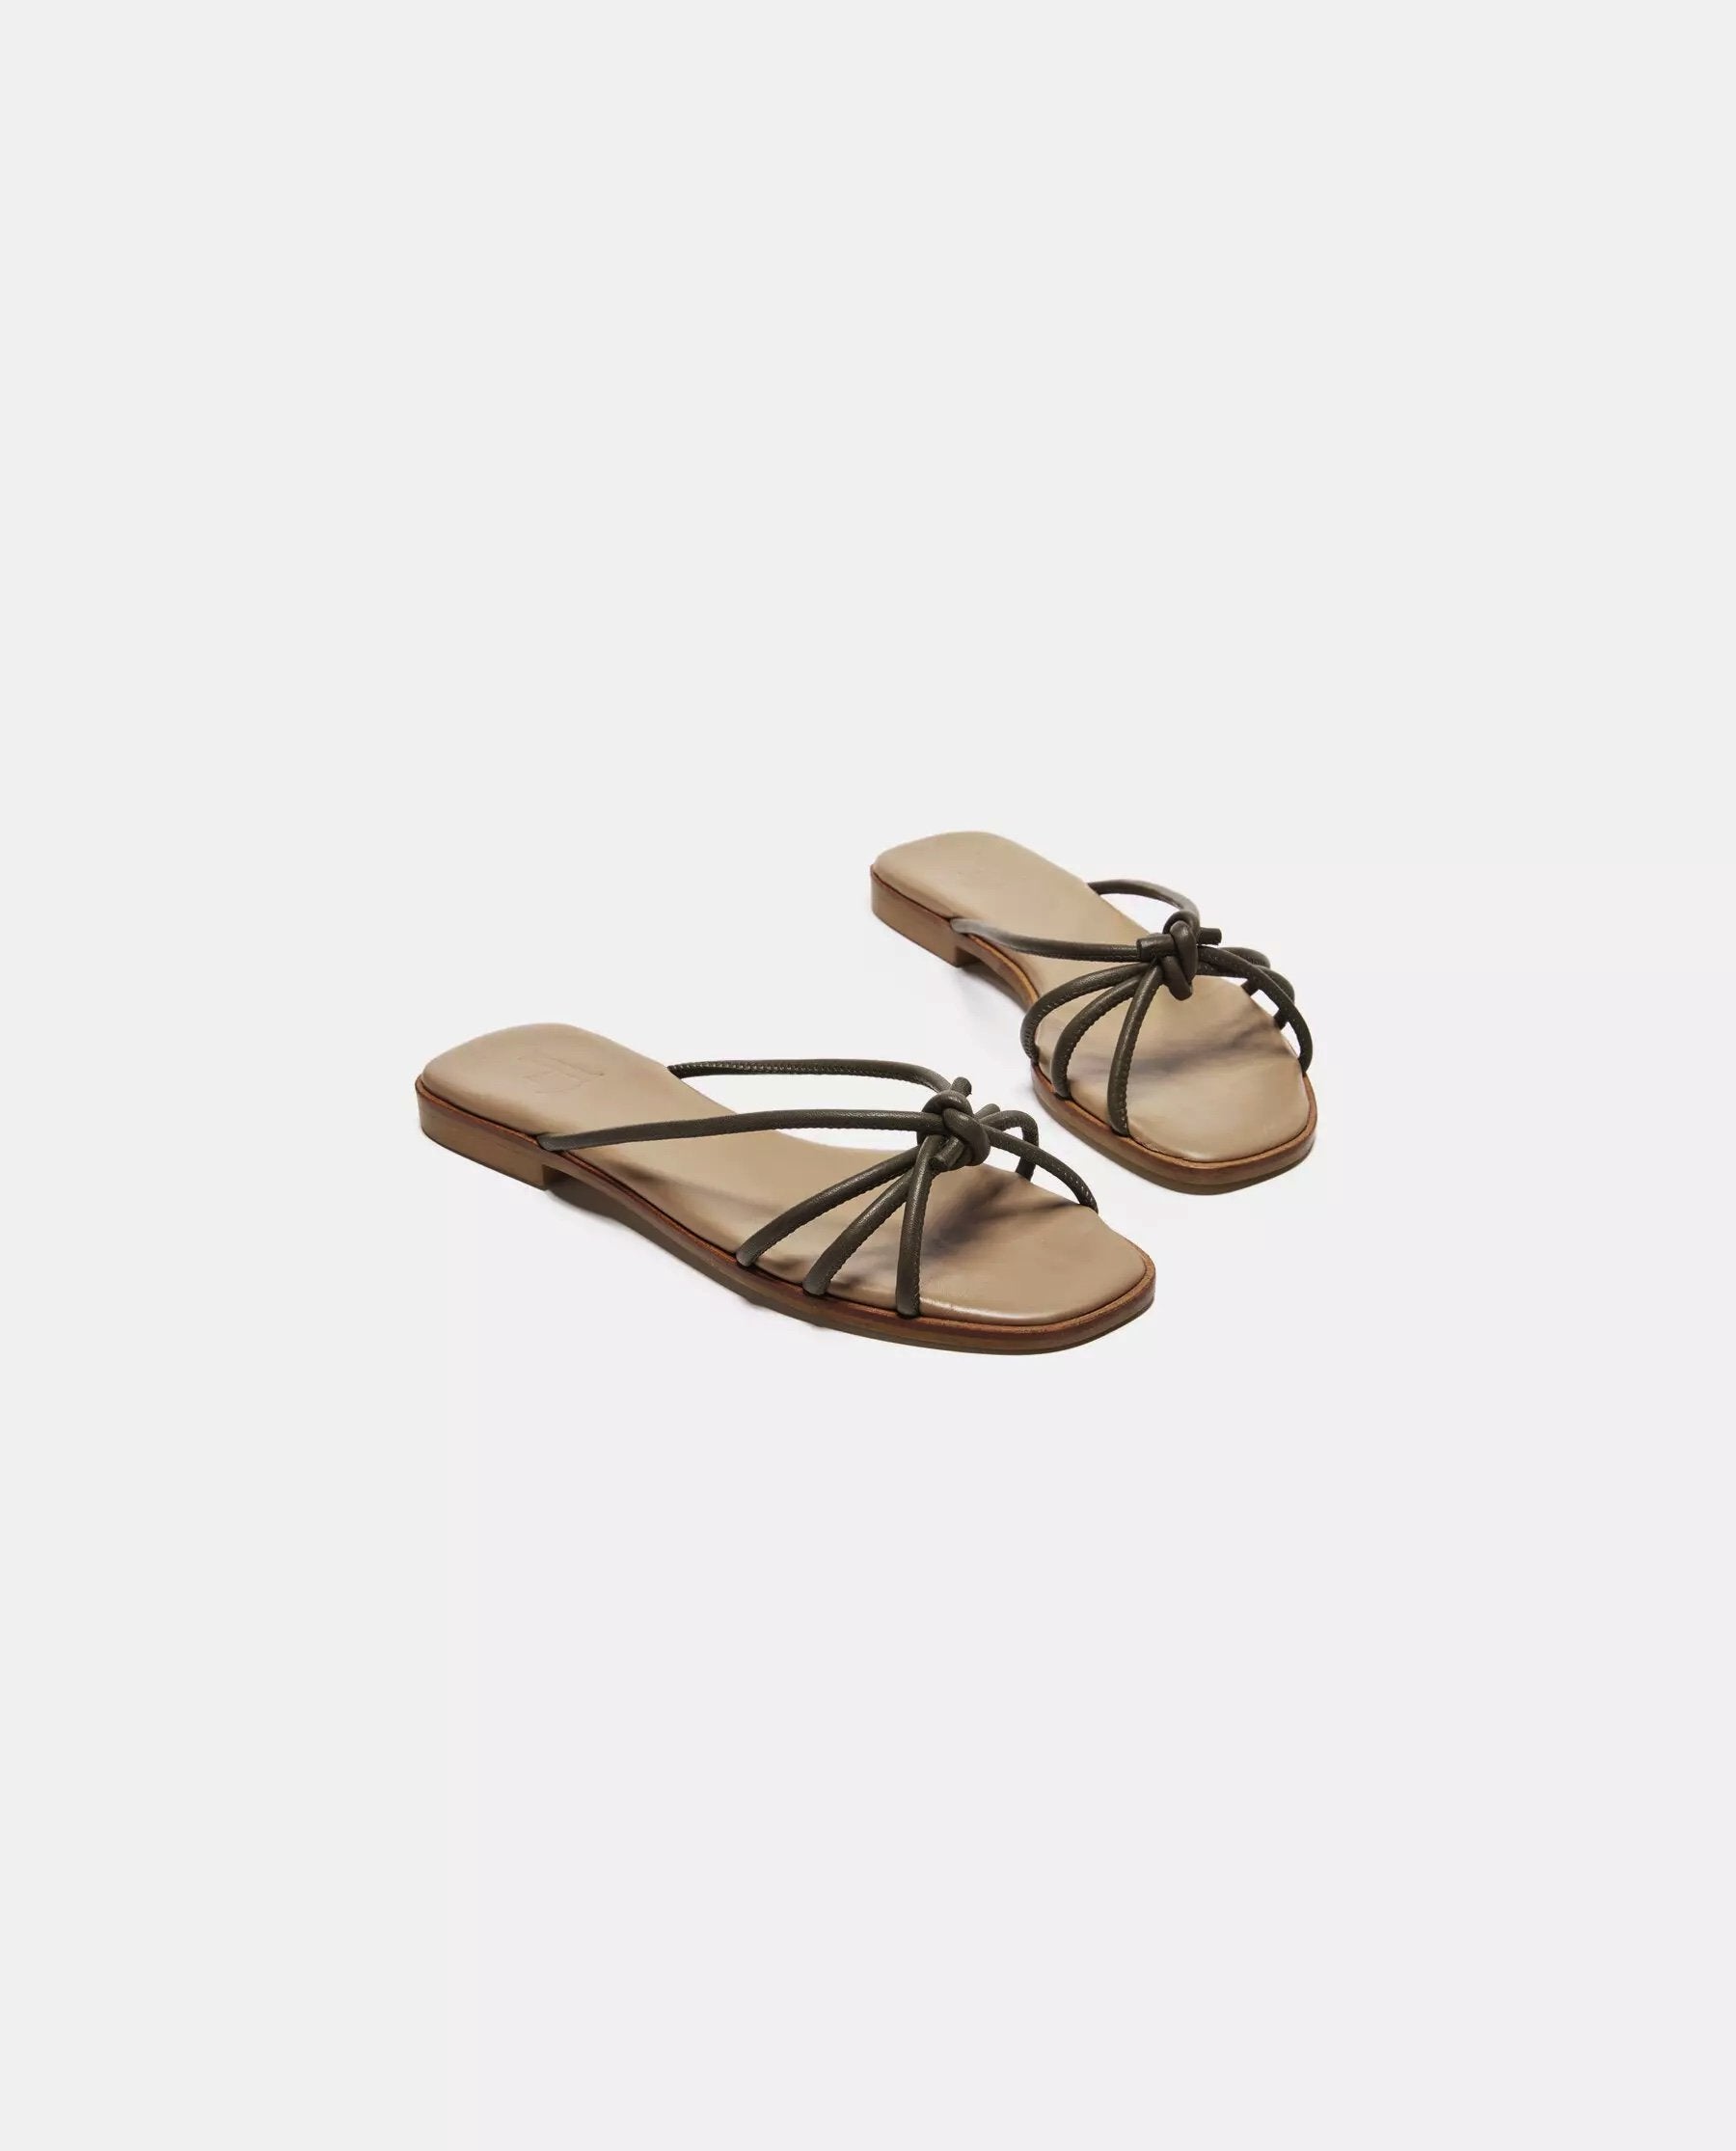 Yvette Leather Khaki Flat Sandals 21010700801-013 - 3